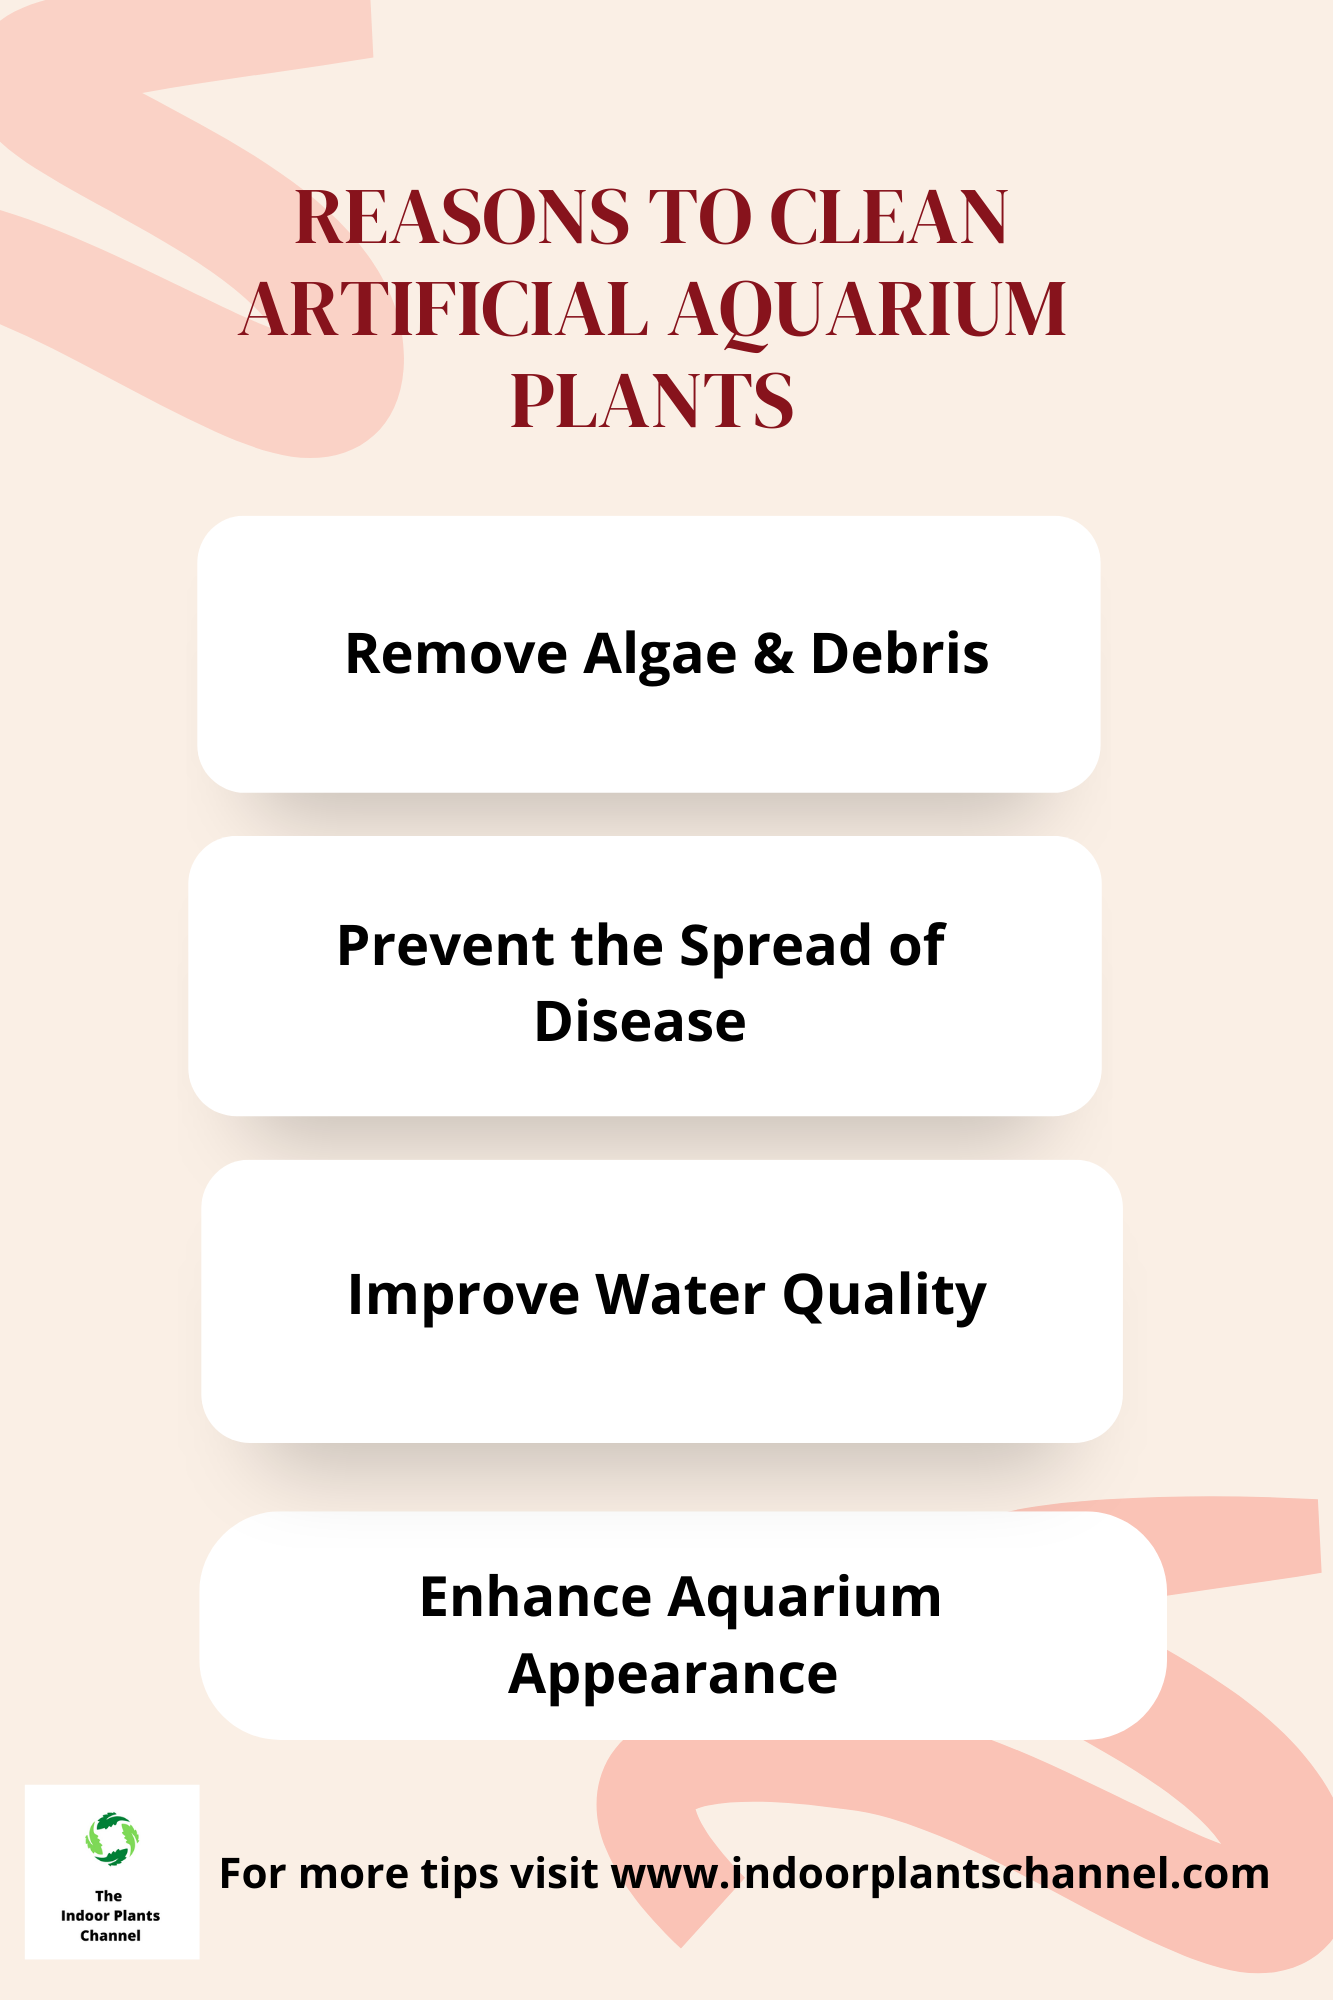 Why You Should Clean Artificial Aquarium Plants